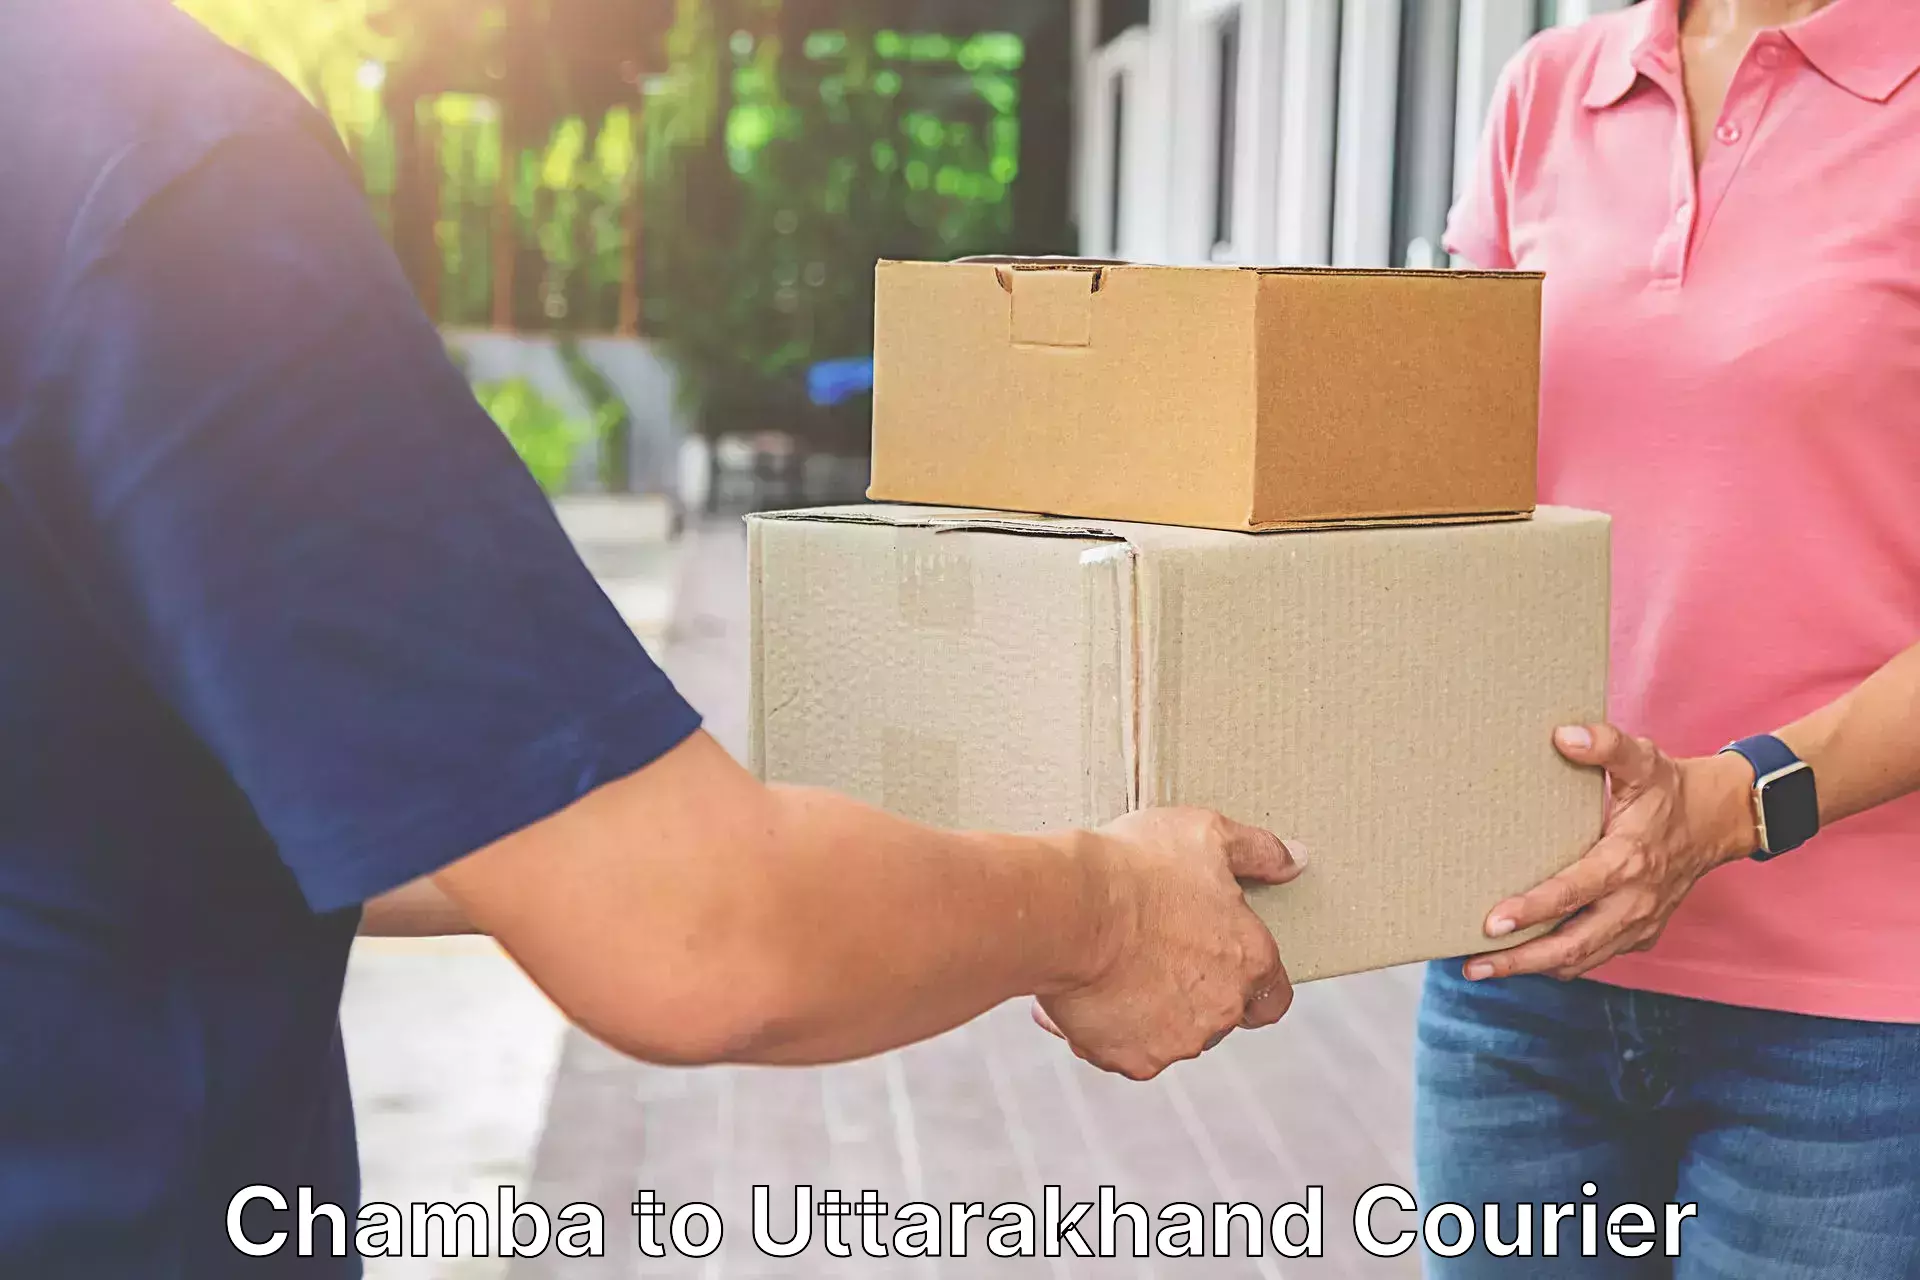 Flexible delivery schedules Chamba to Dehradun